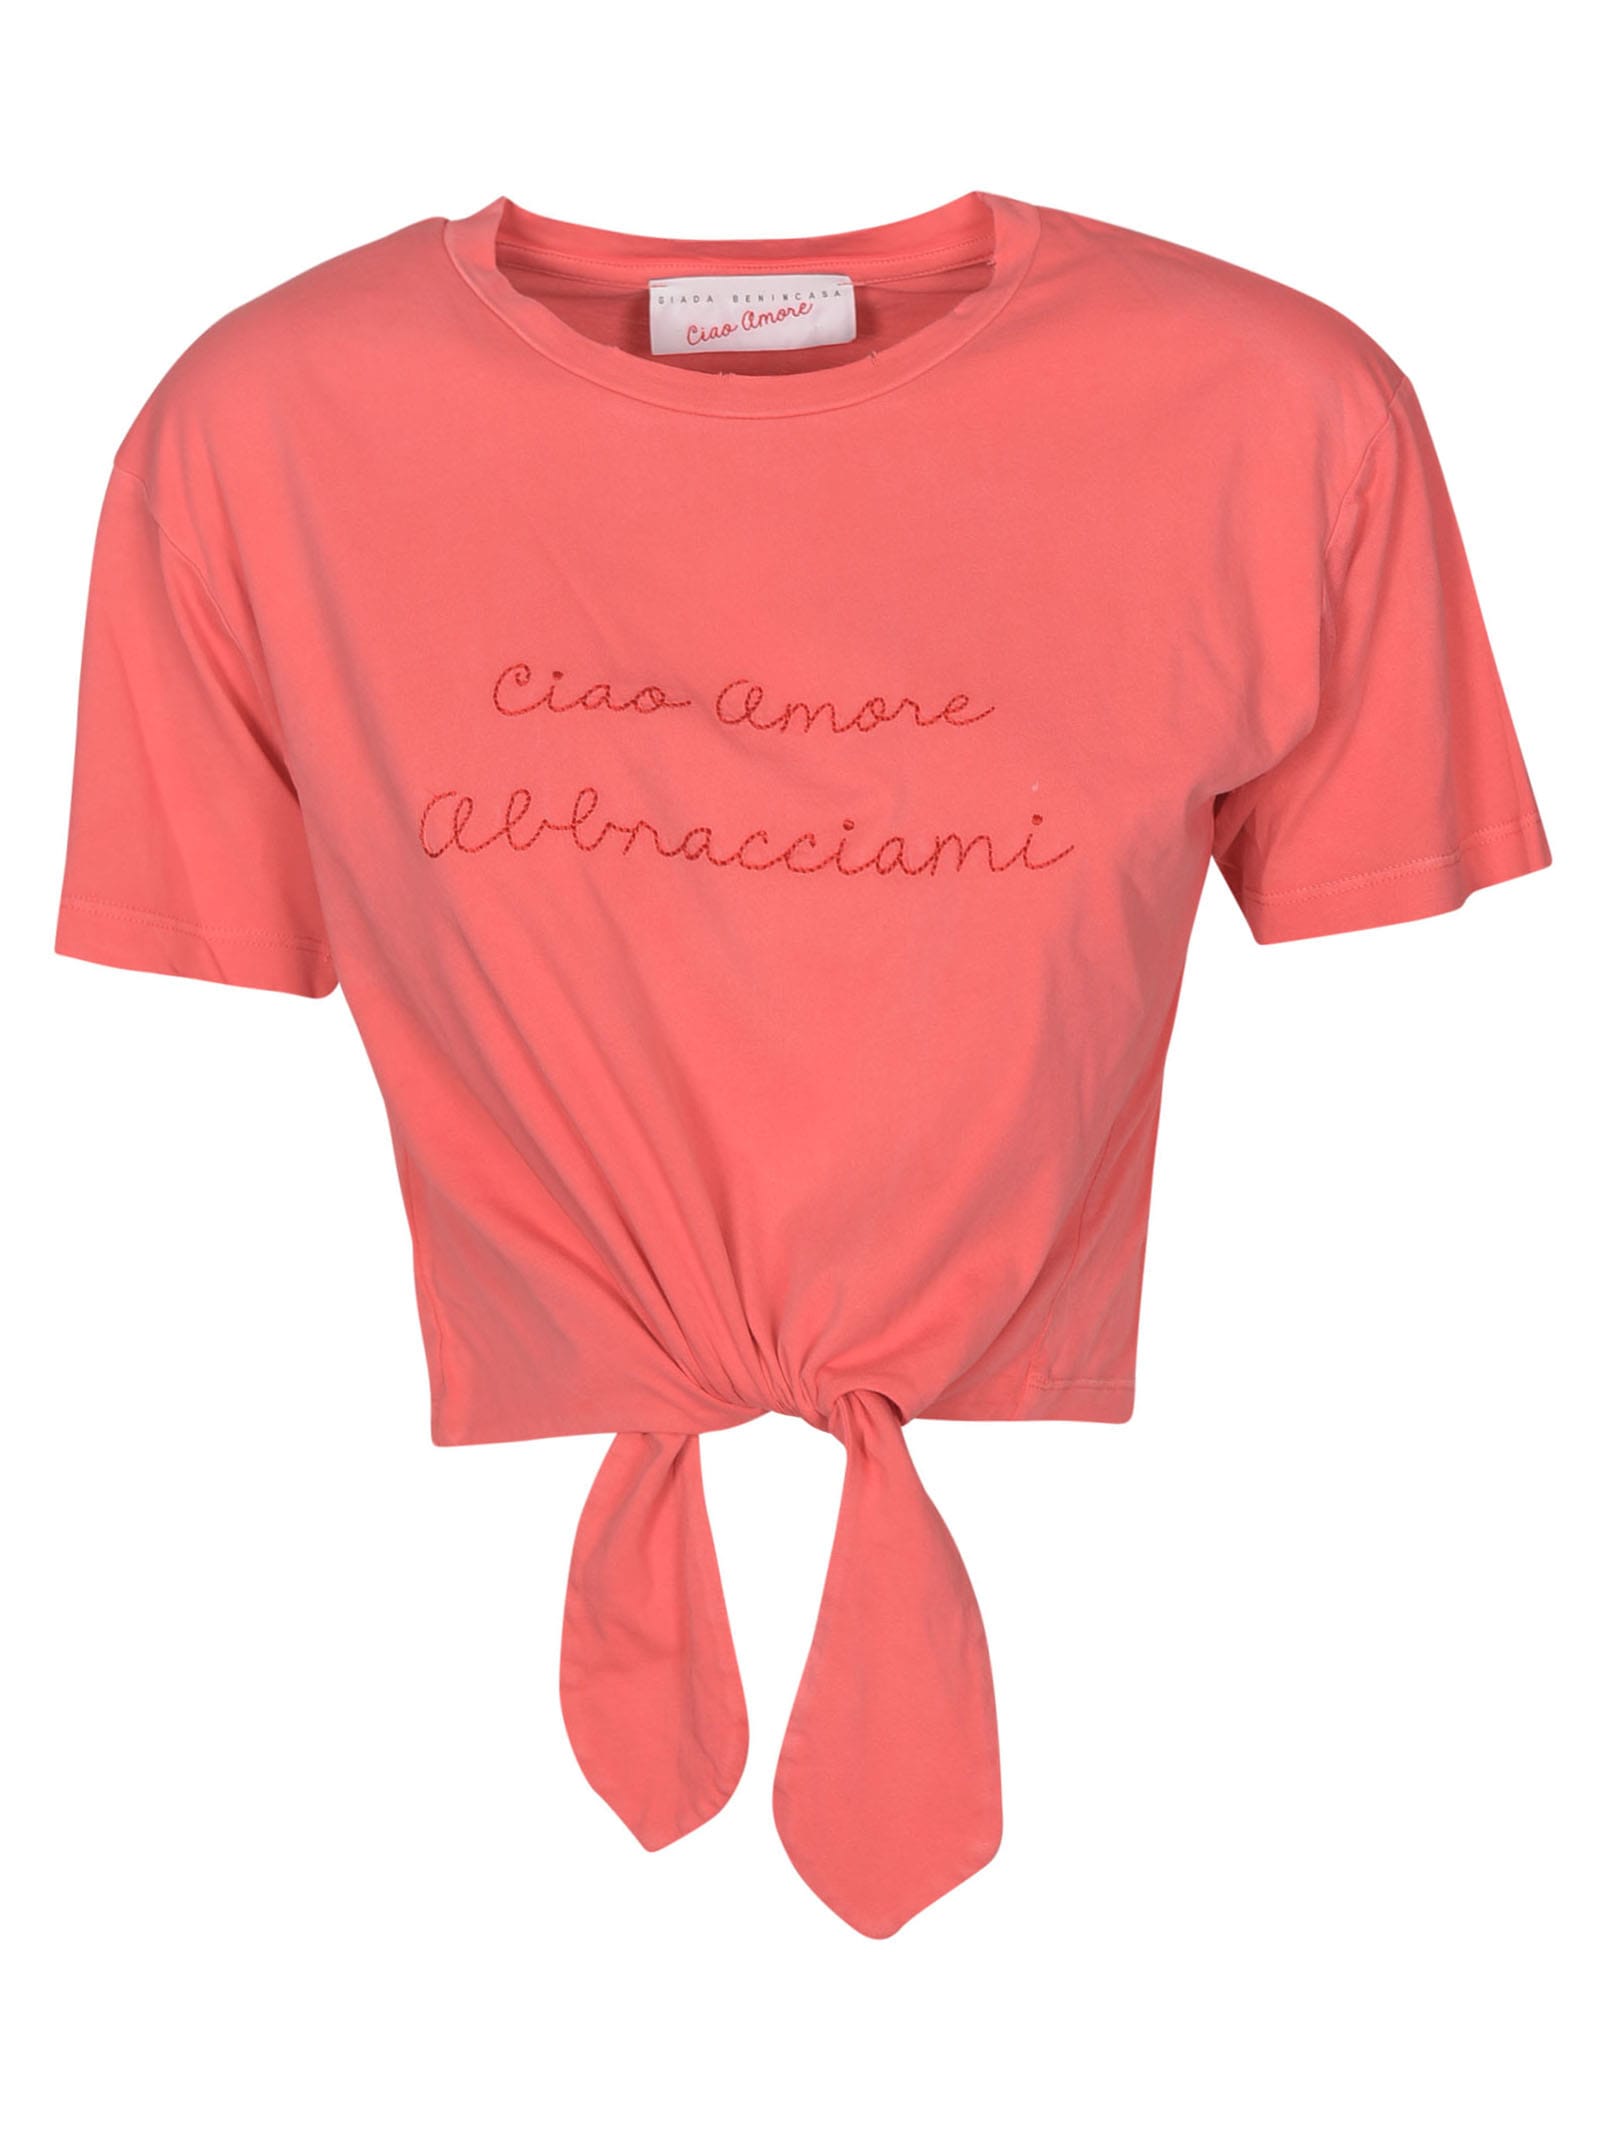 Giada Benincasa Signature Logo Cropped T-shirt